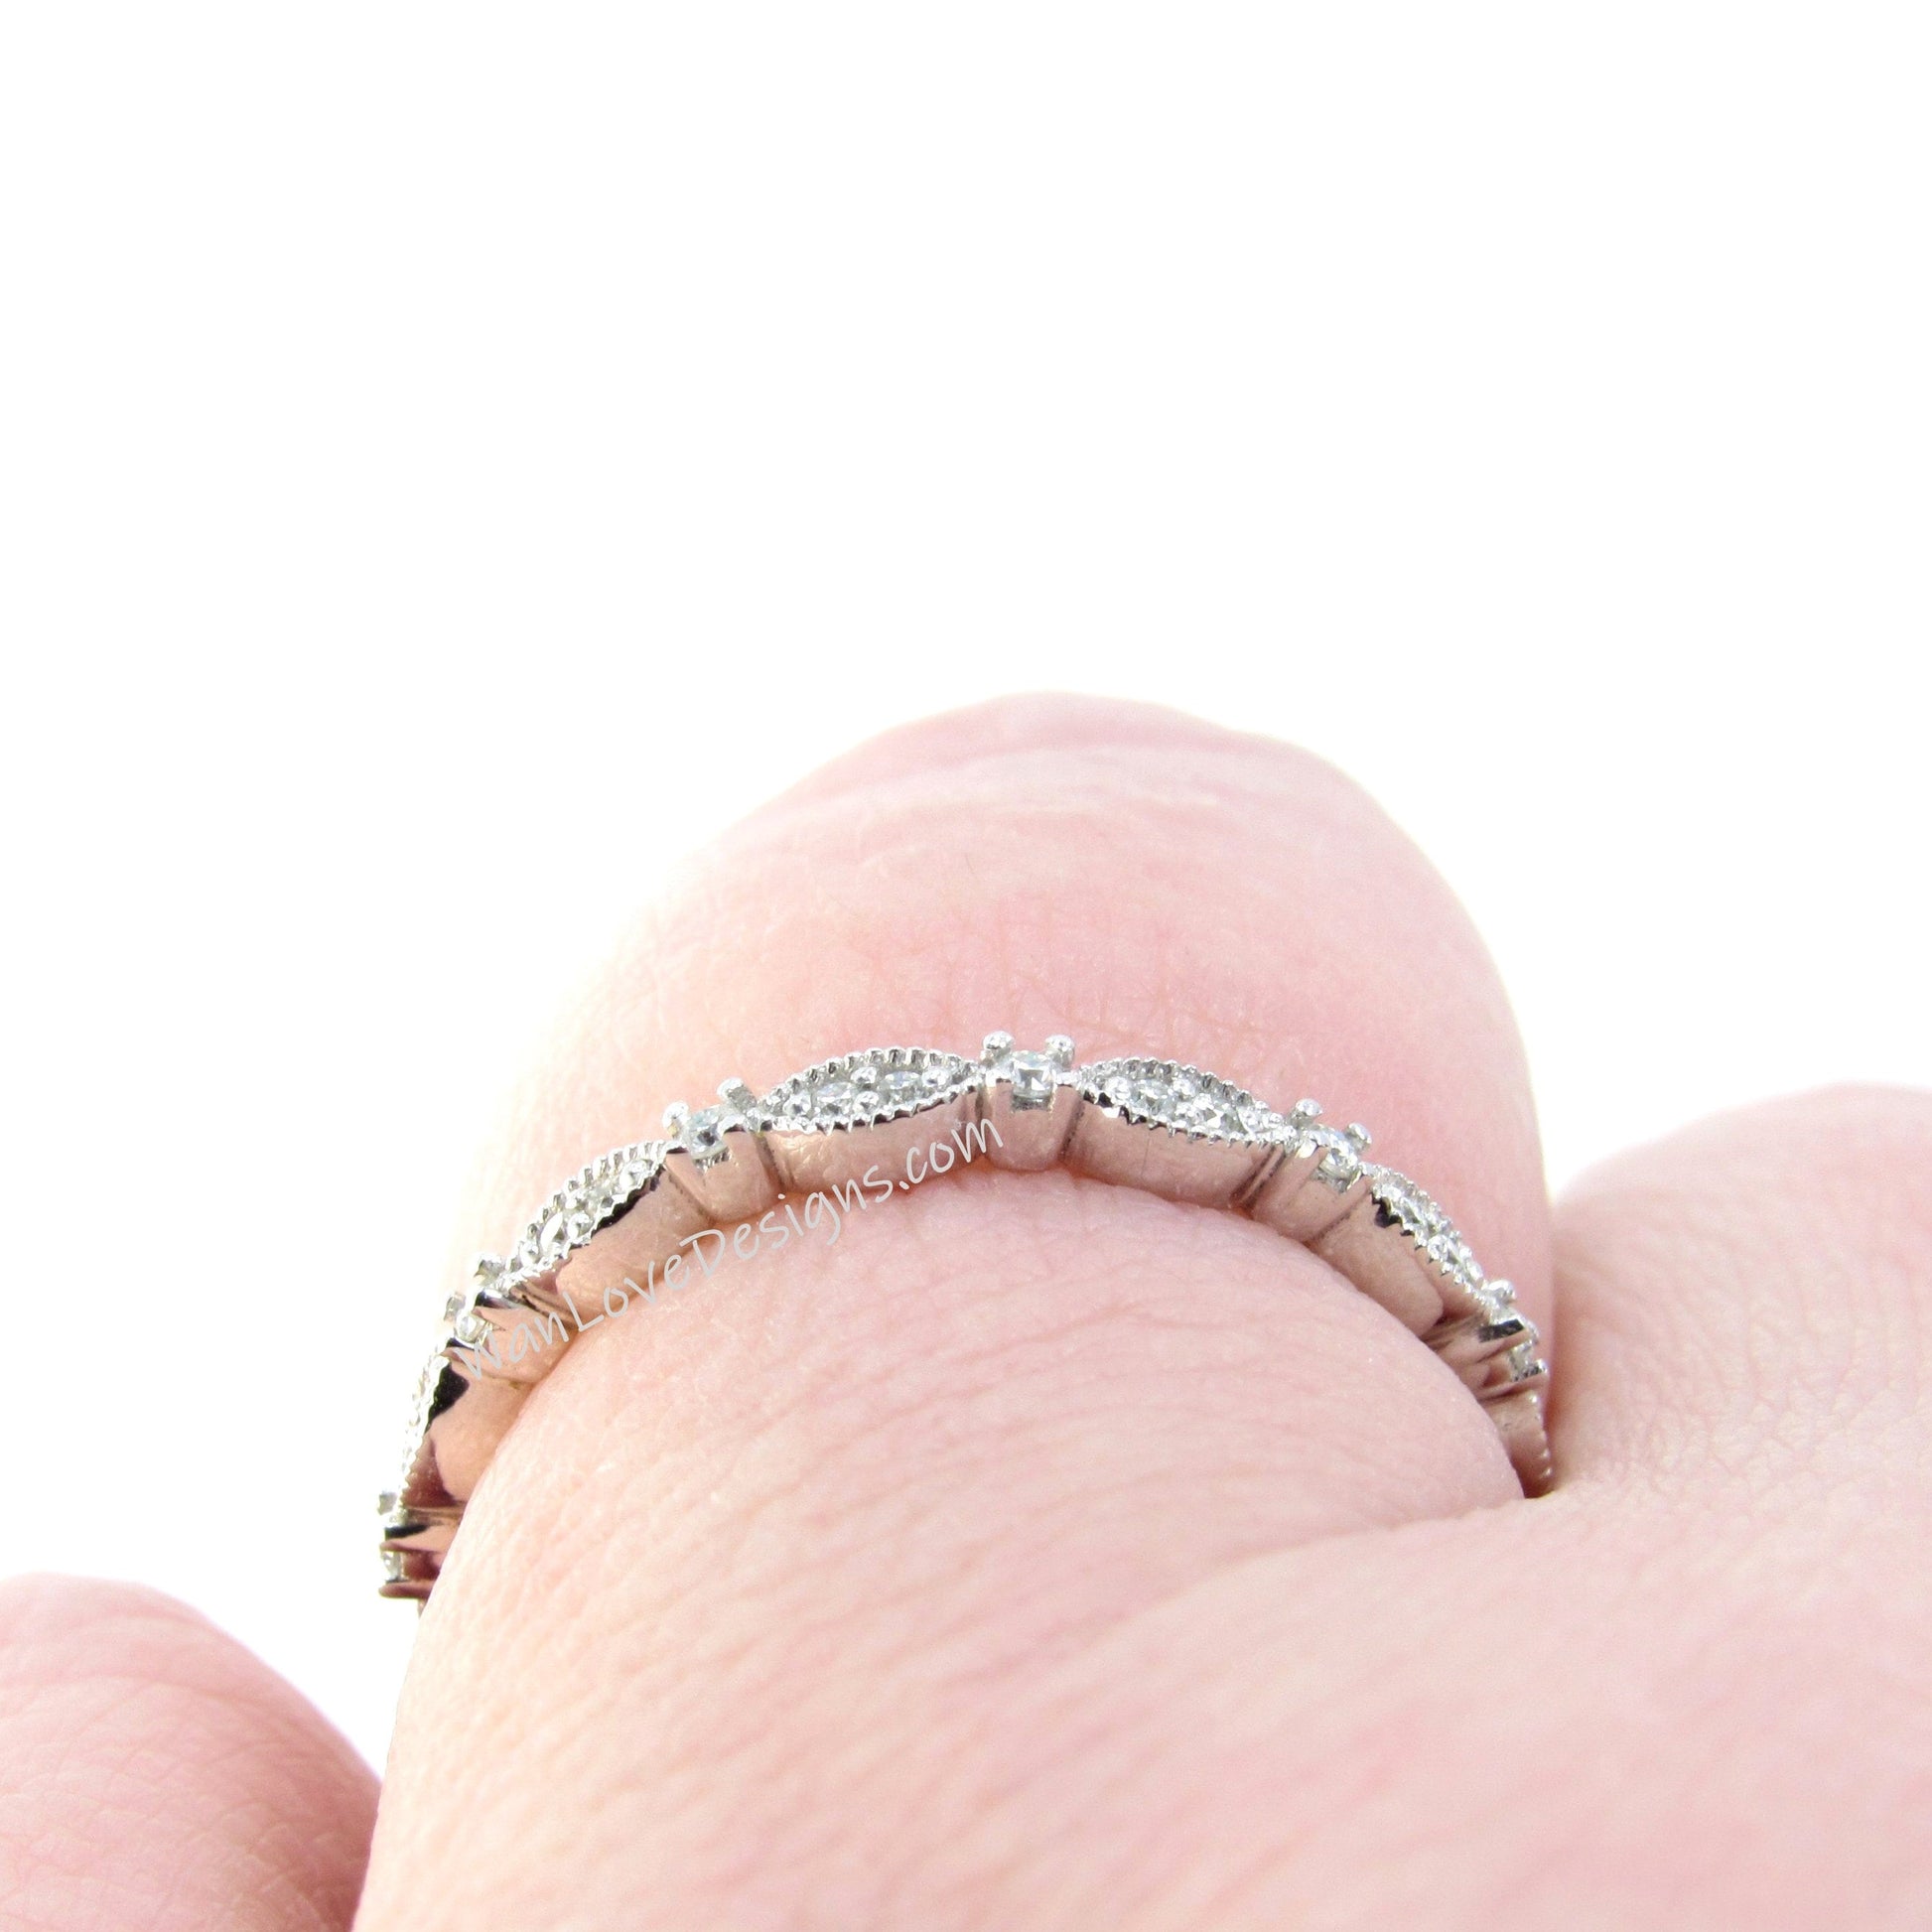 Vintage Diamond Scalloped Wedding Band in Solid Gold/ Milgrain Platinum Ring, Wedding Anniversary Ring, Promise Ring, Birthstone Ring. Wan Love Designs